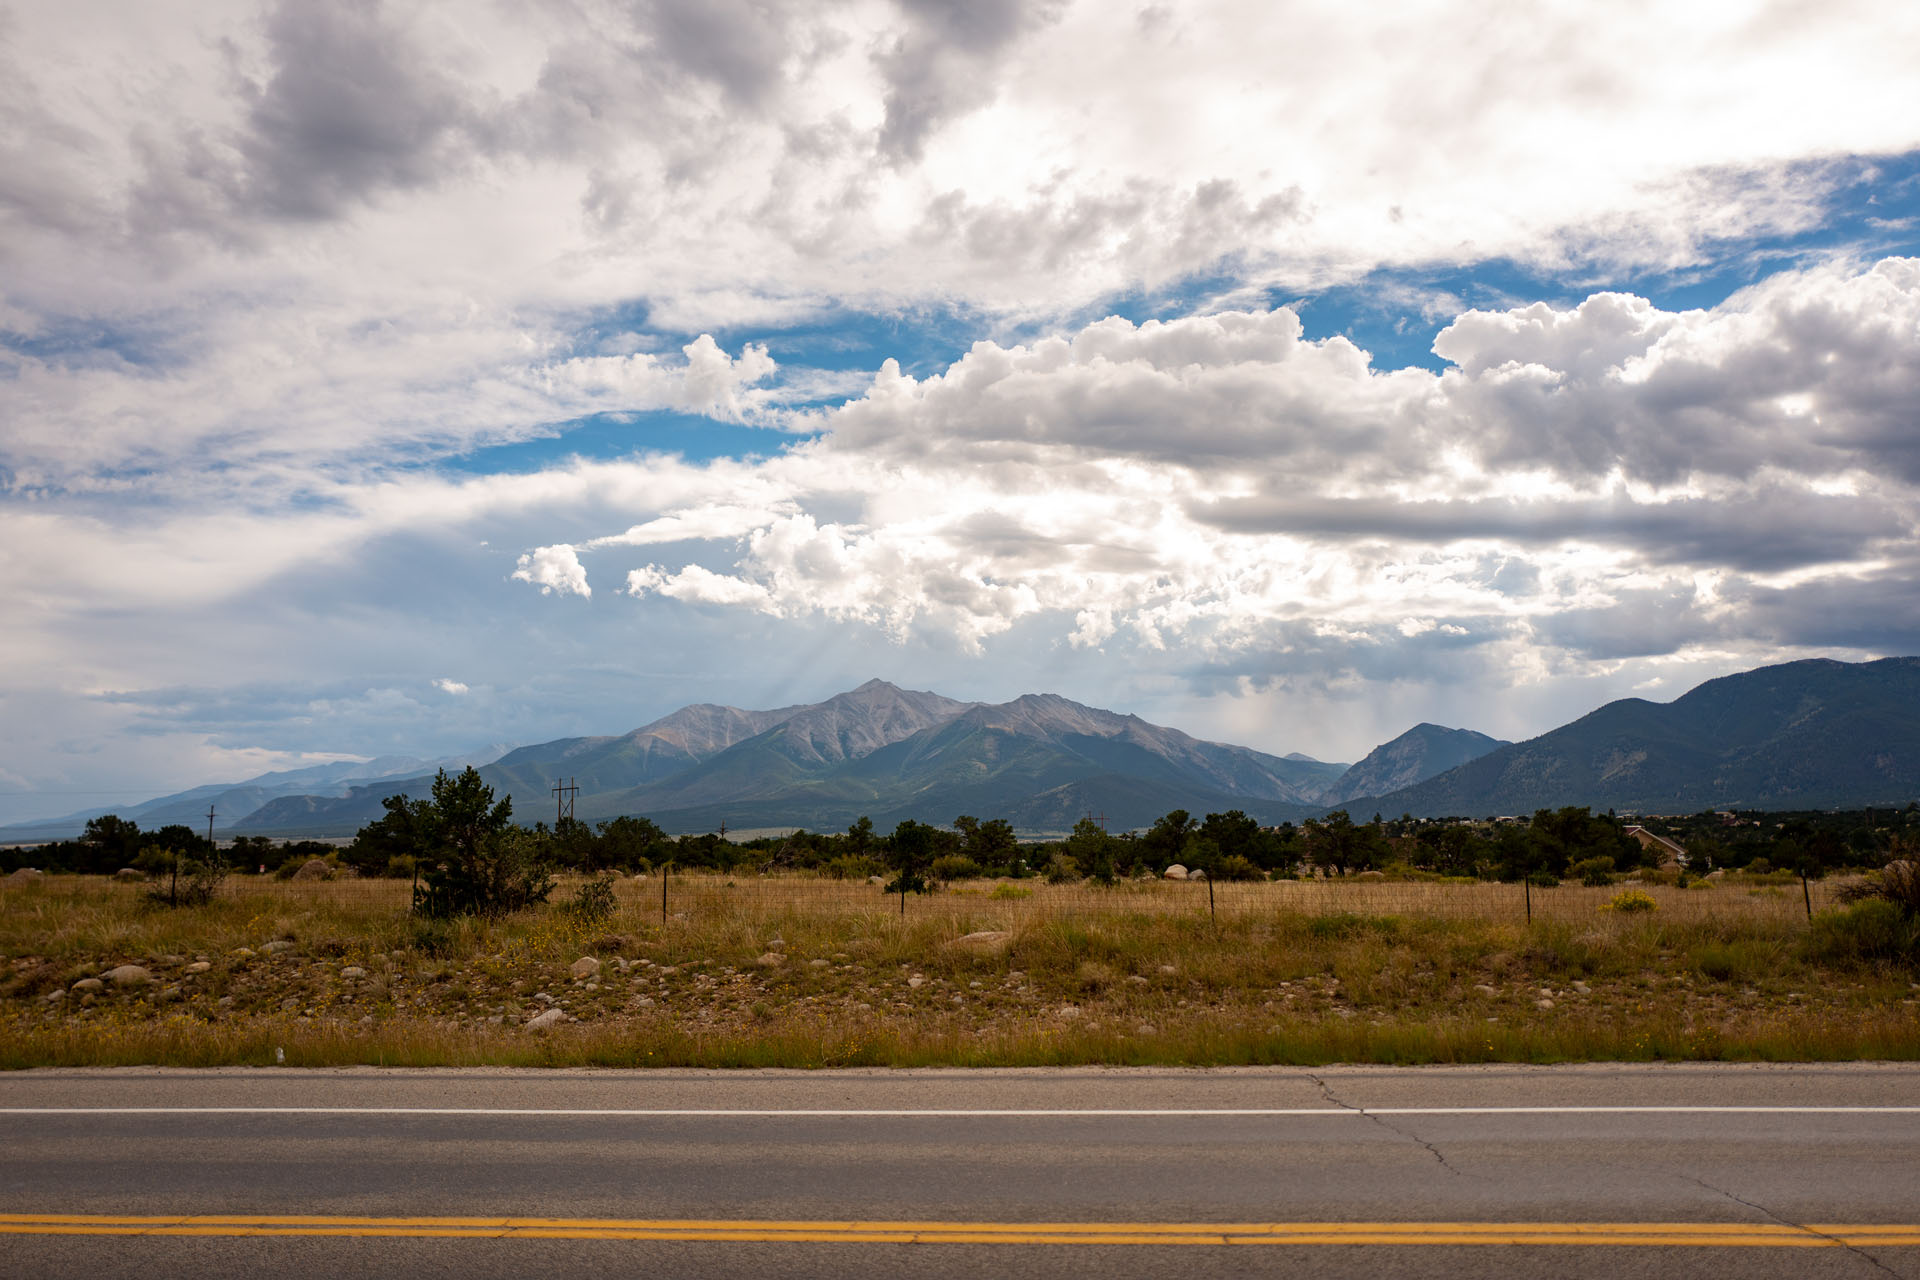 The Rocky Mountains in Colorado